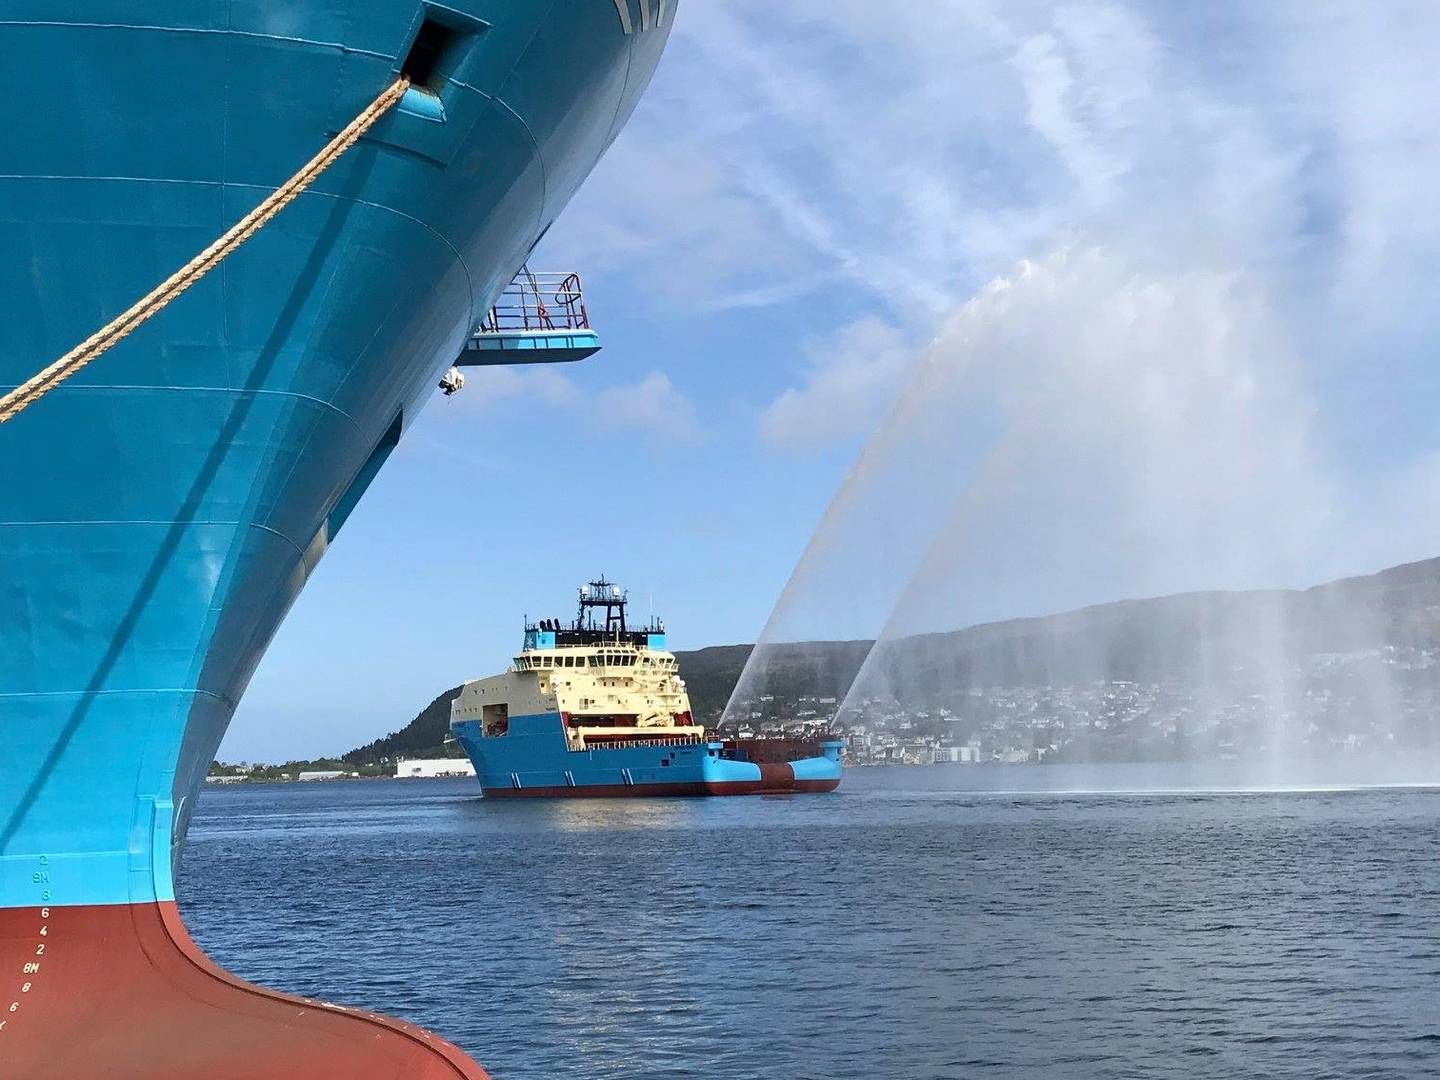 Foto: Maersk Supply Service